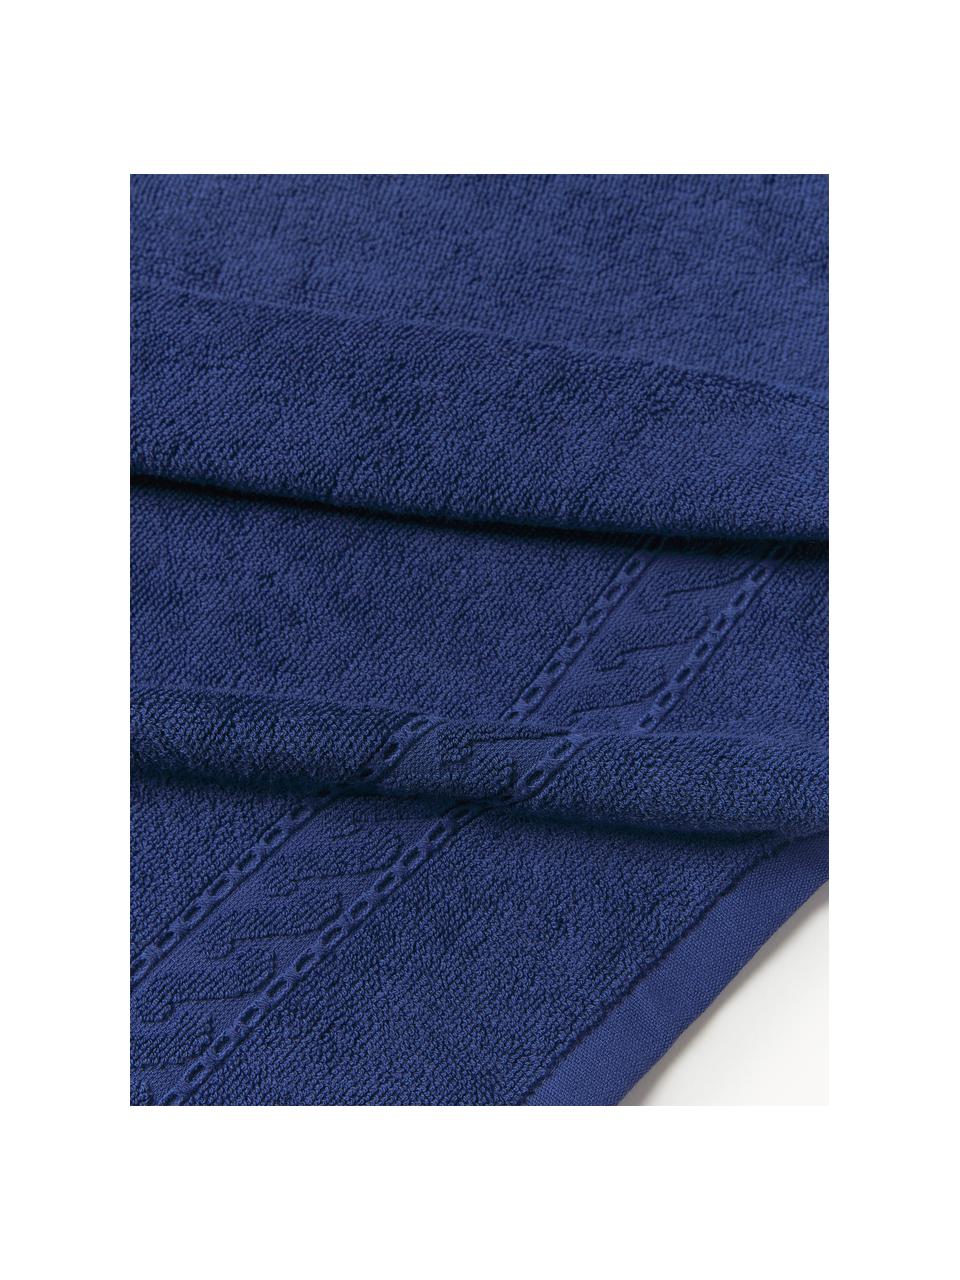 Asciugamano Cordelia, varie misure, Blu scuro, Telo bagno, Larg. 70 x Lung. 140 cm